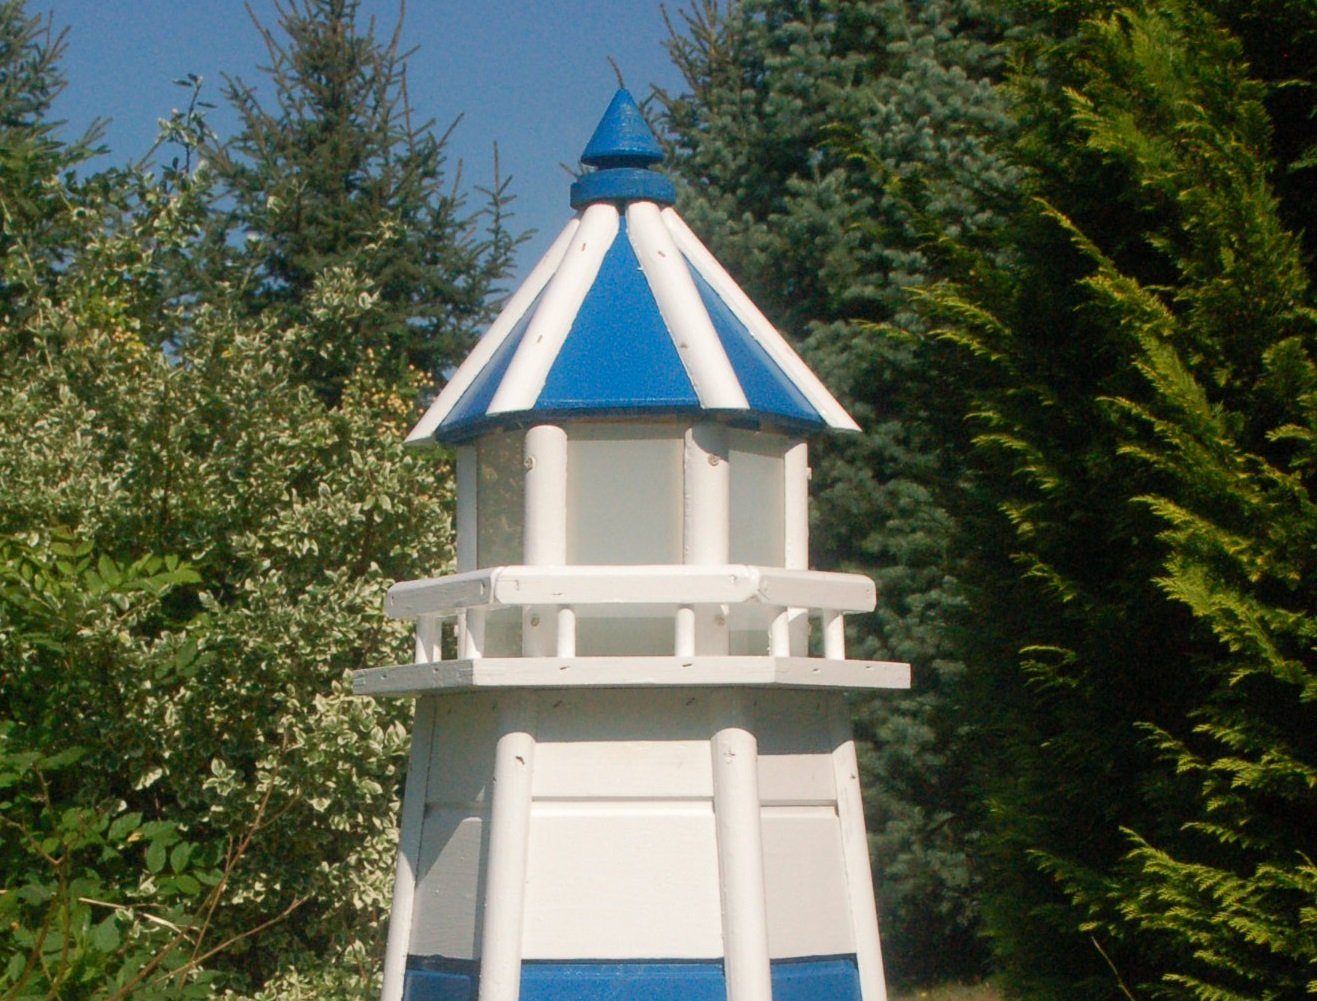 Leuchtturm 1,40 HANNUSCH 230 Holz DEKO DSH V SHOP blau-weiß Beleuchtung m mit Gartenfigur